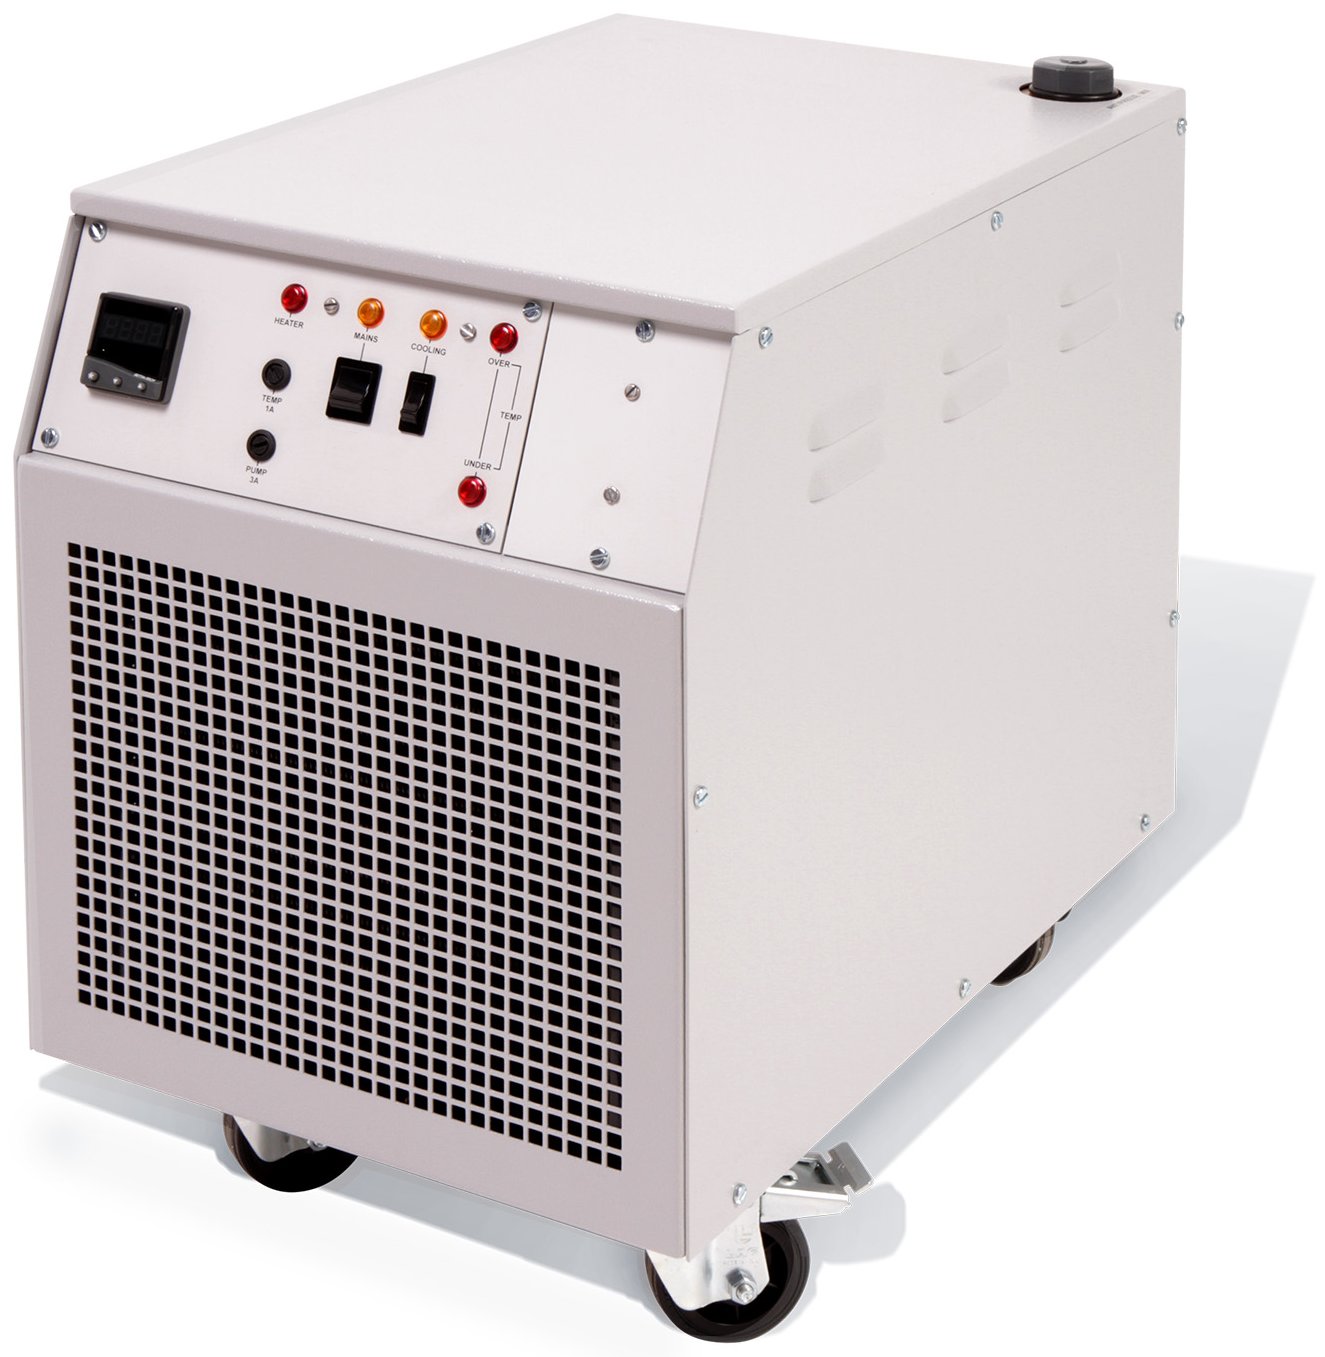 Accesorio p/FT17-50-A: Circulador con control de temperatura PID para mezcla concentrada FT17-15-A